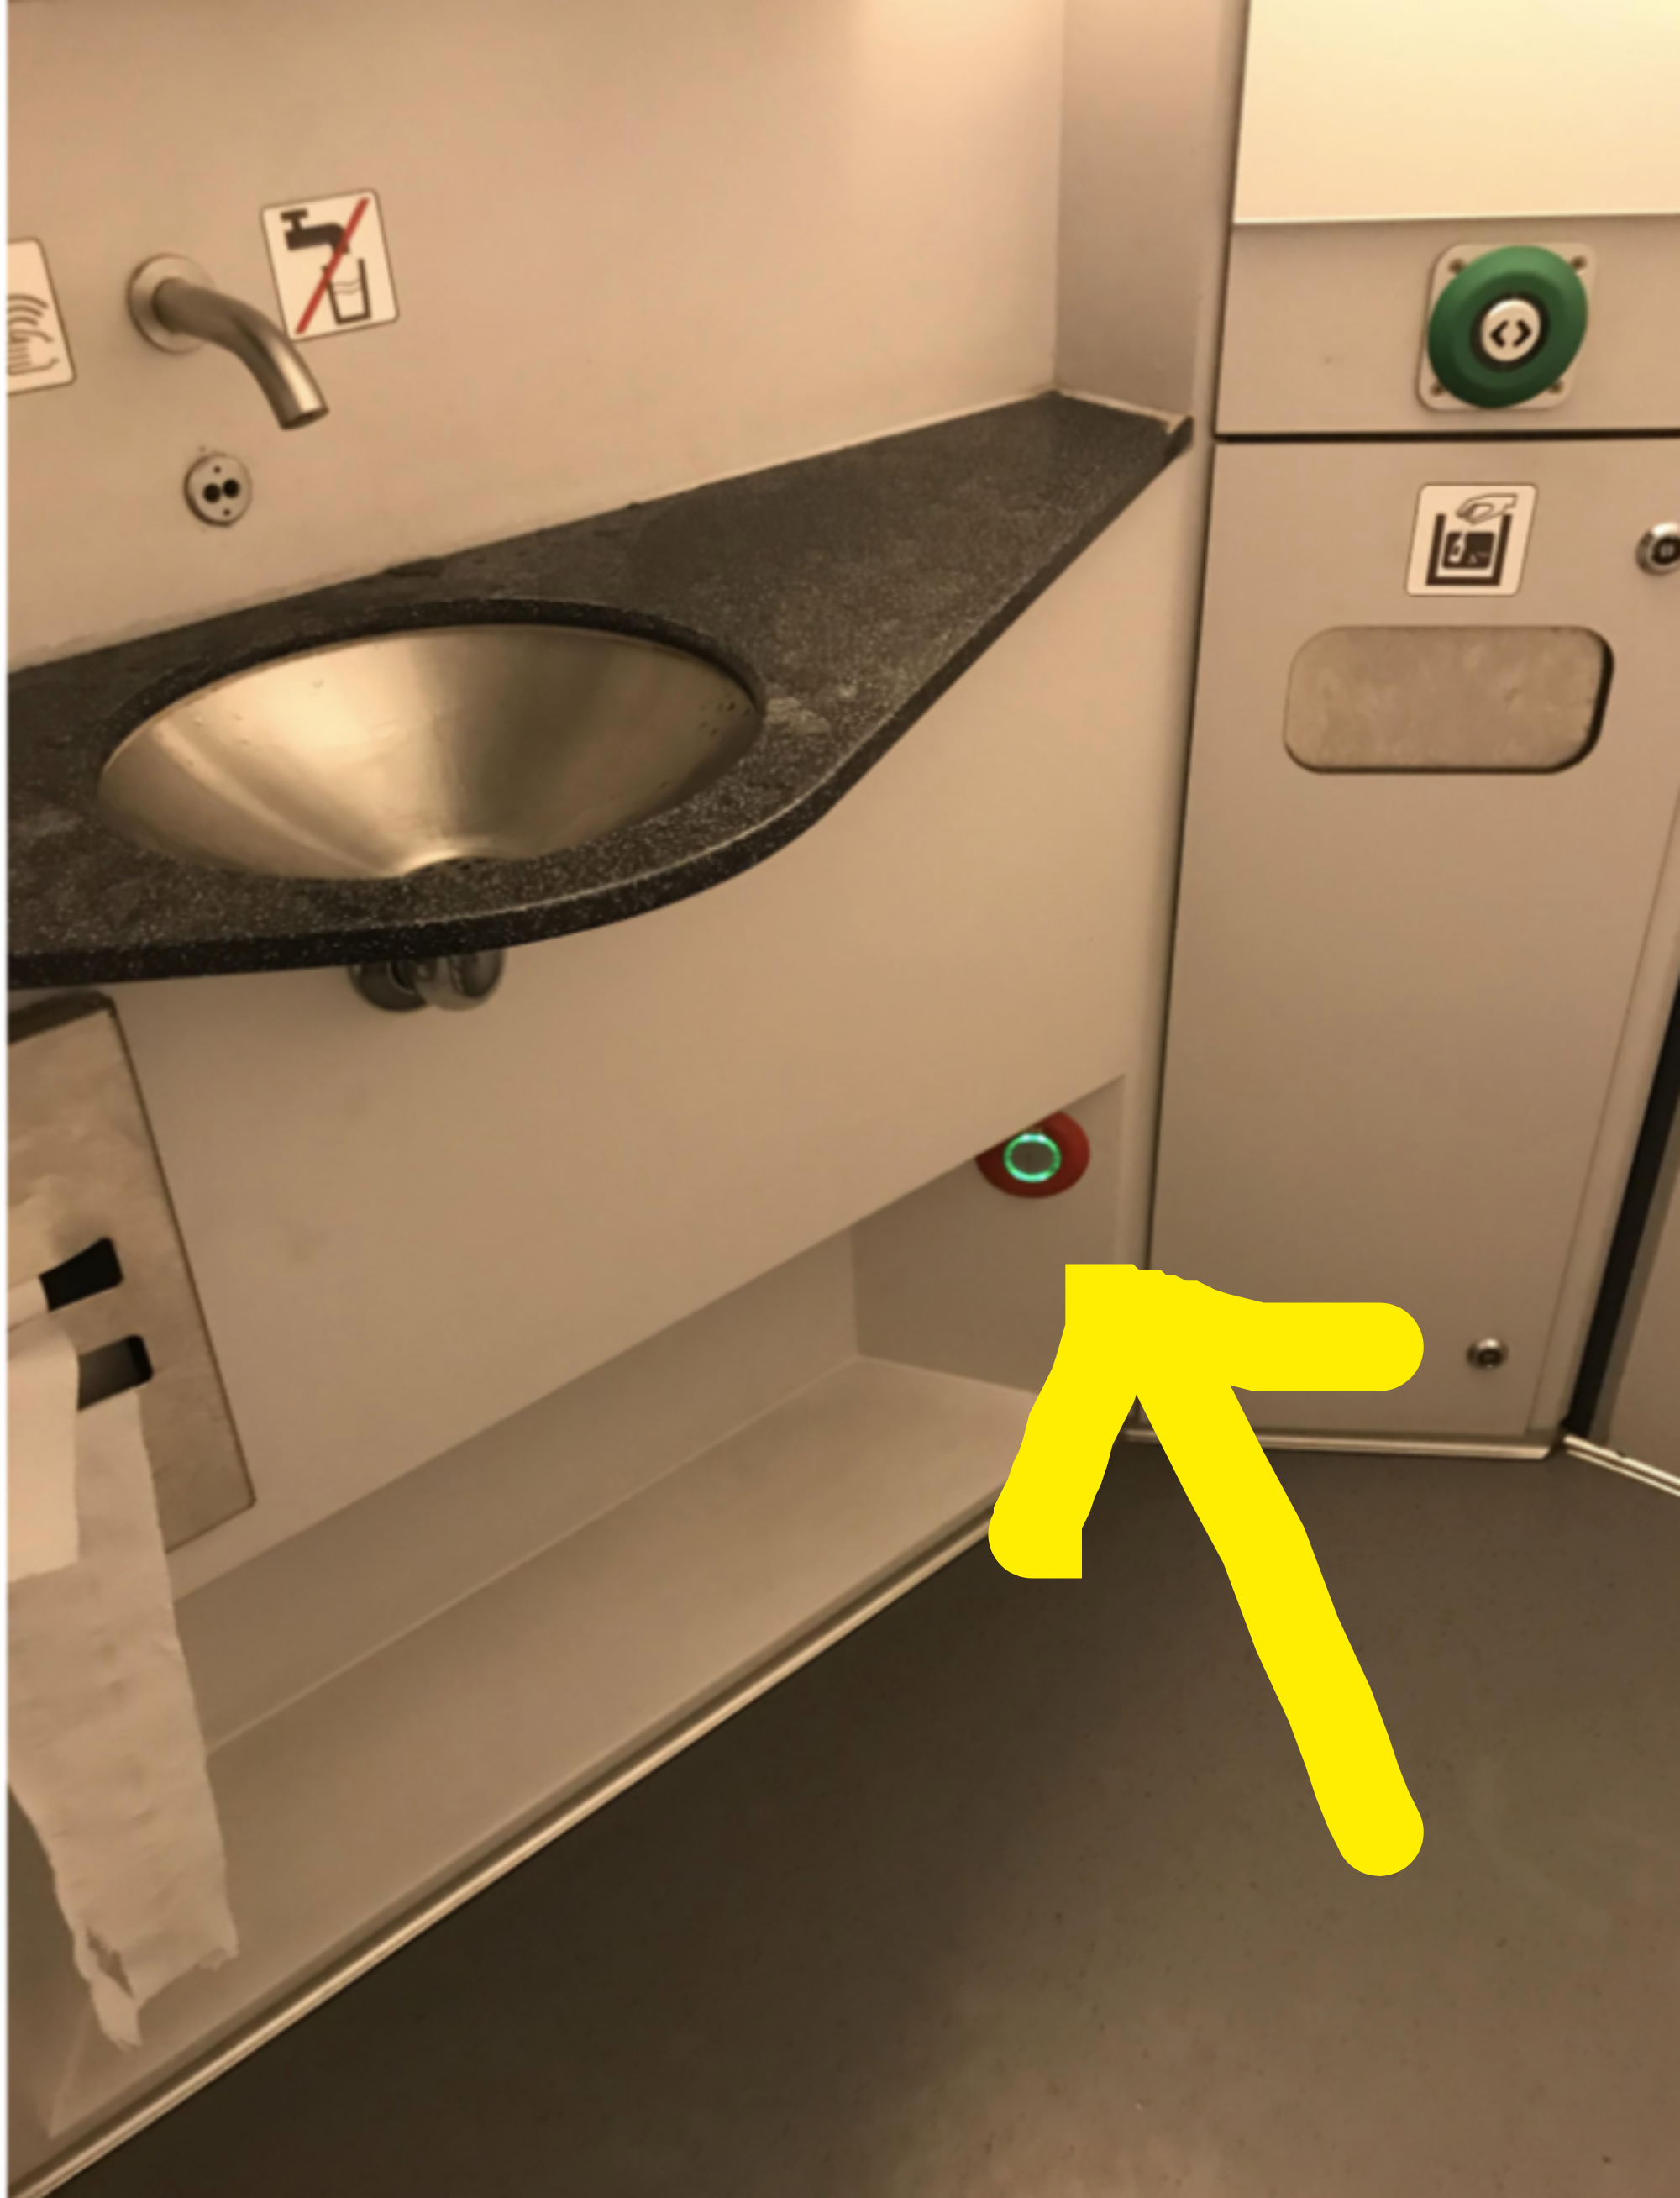 An arrow points out a button near the floor, hidden below the bathroom&#x27;s sink